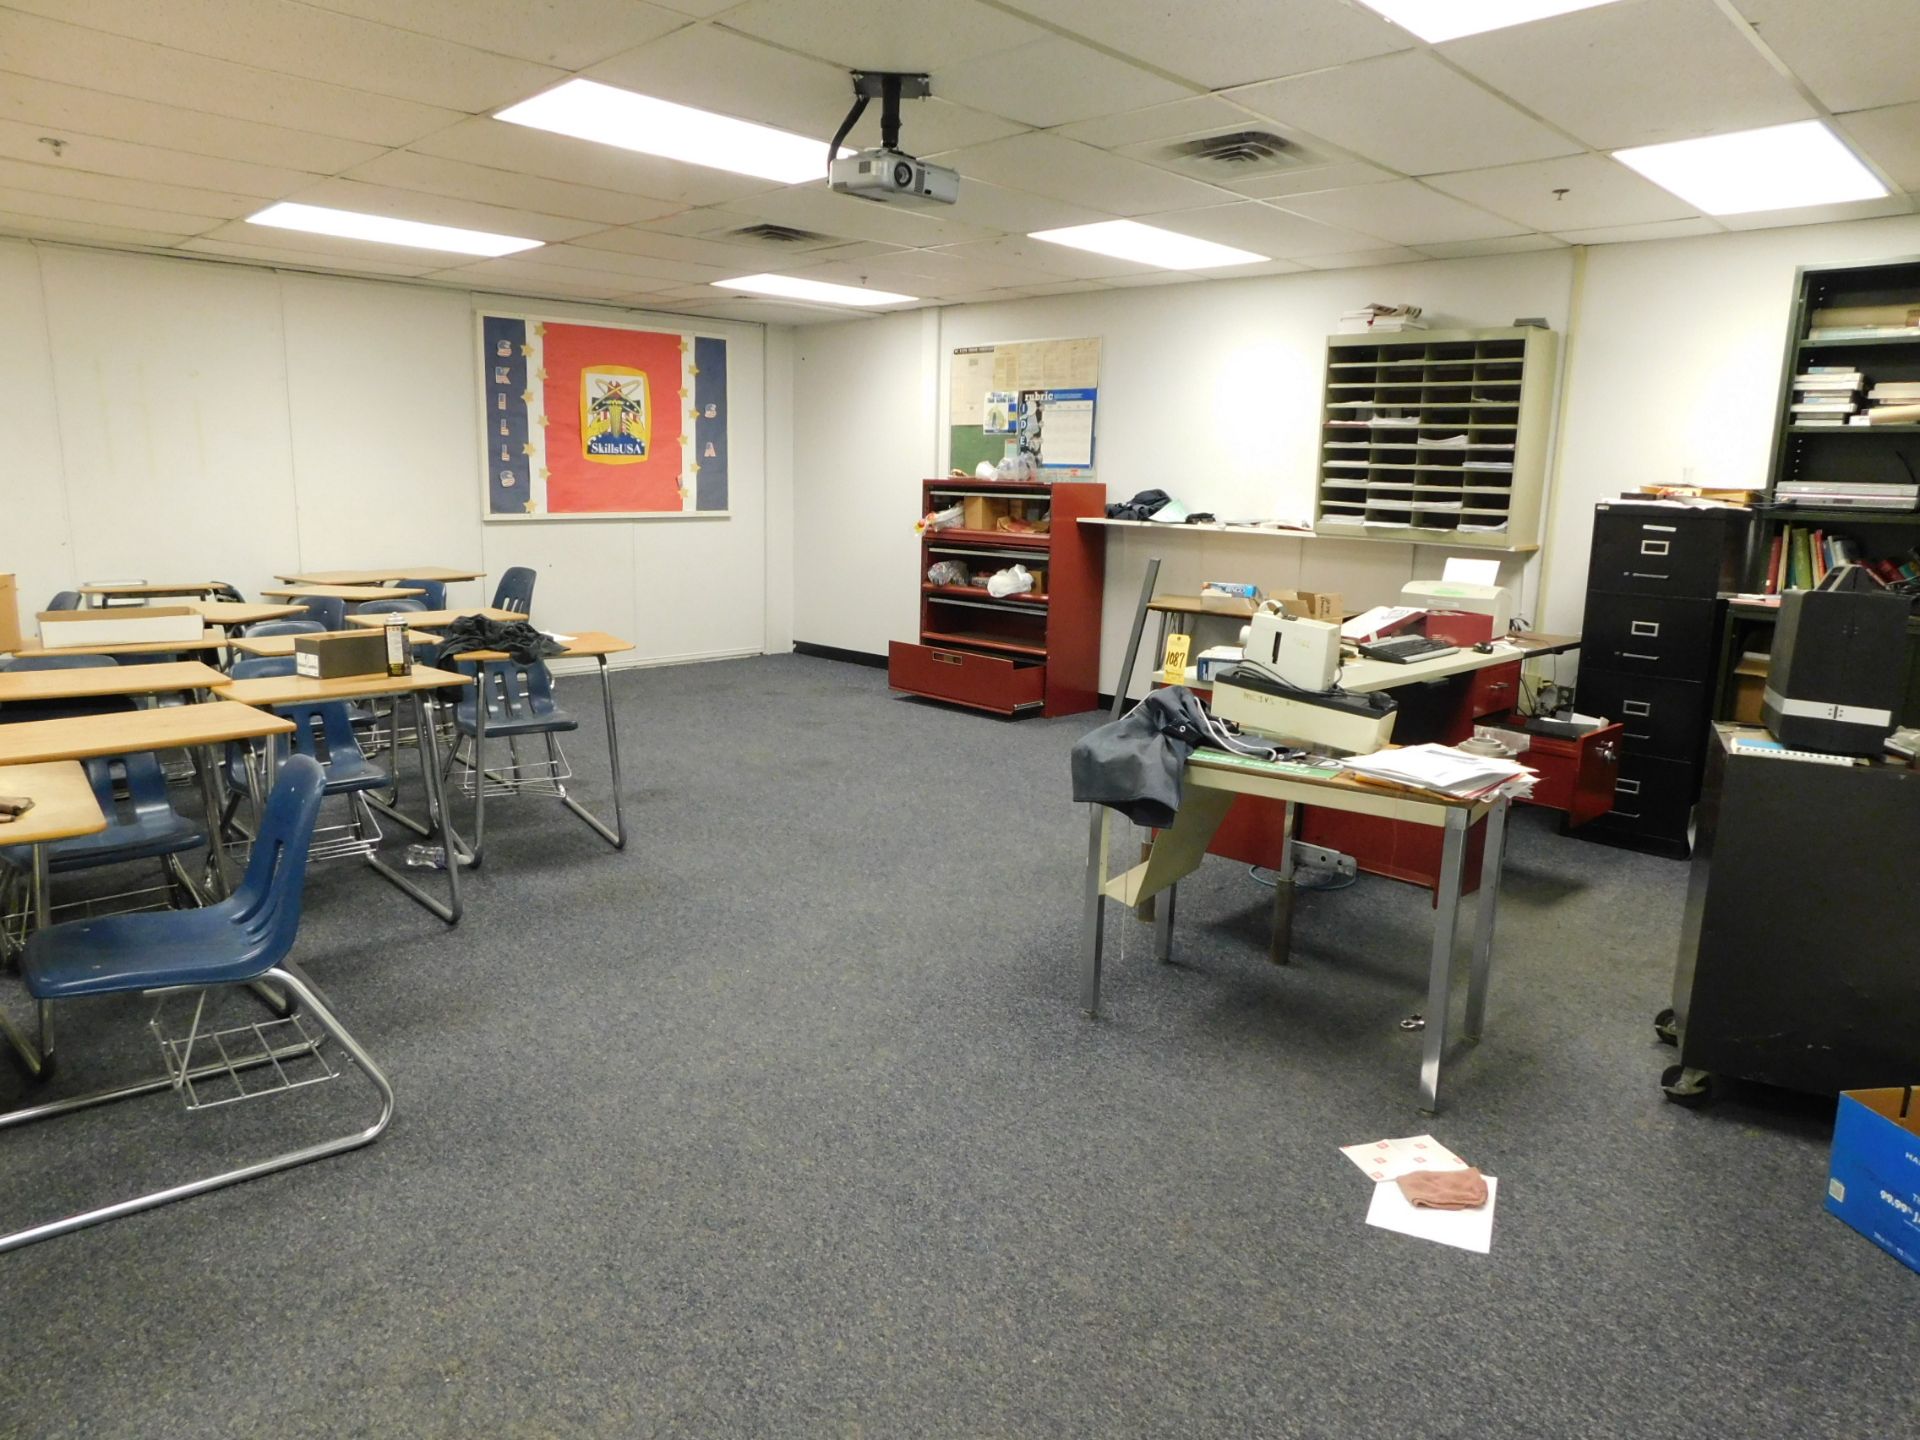 Contents of Room 234, Student Desks, Desk, File Cabinets, and Interwrite Smart Board